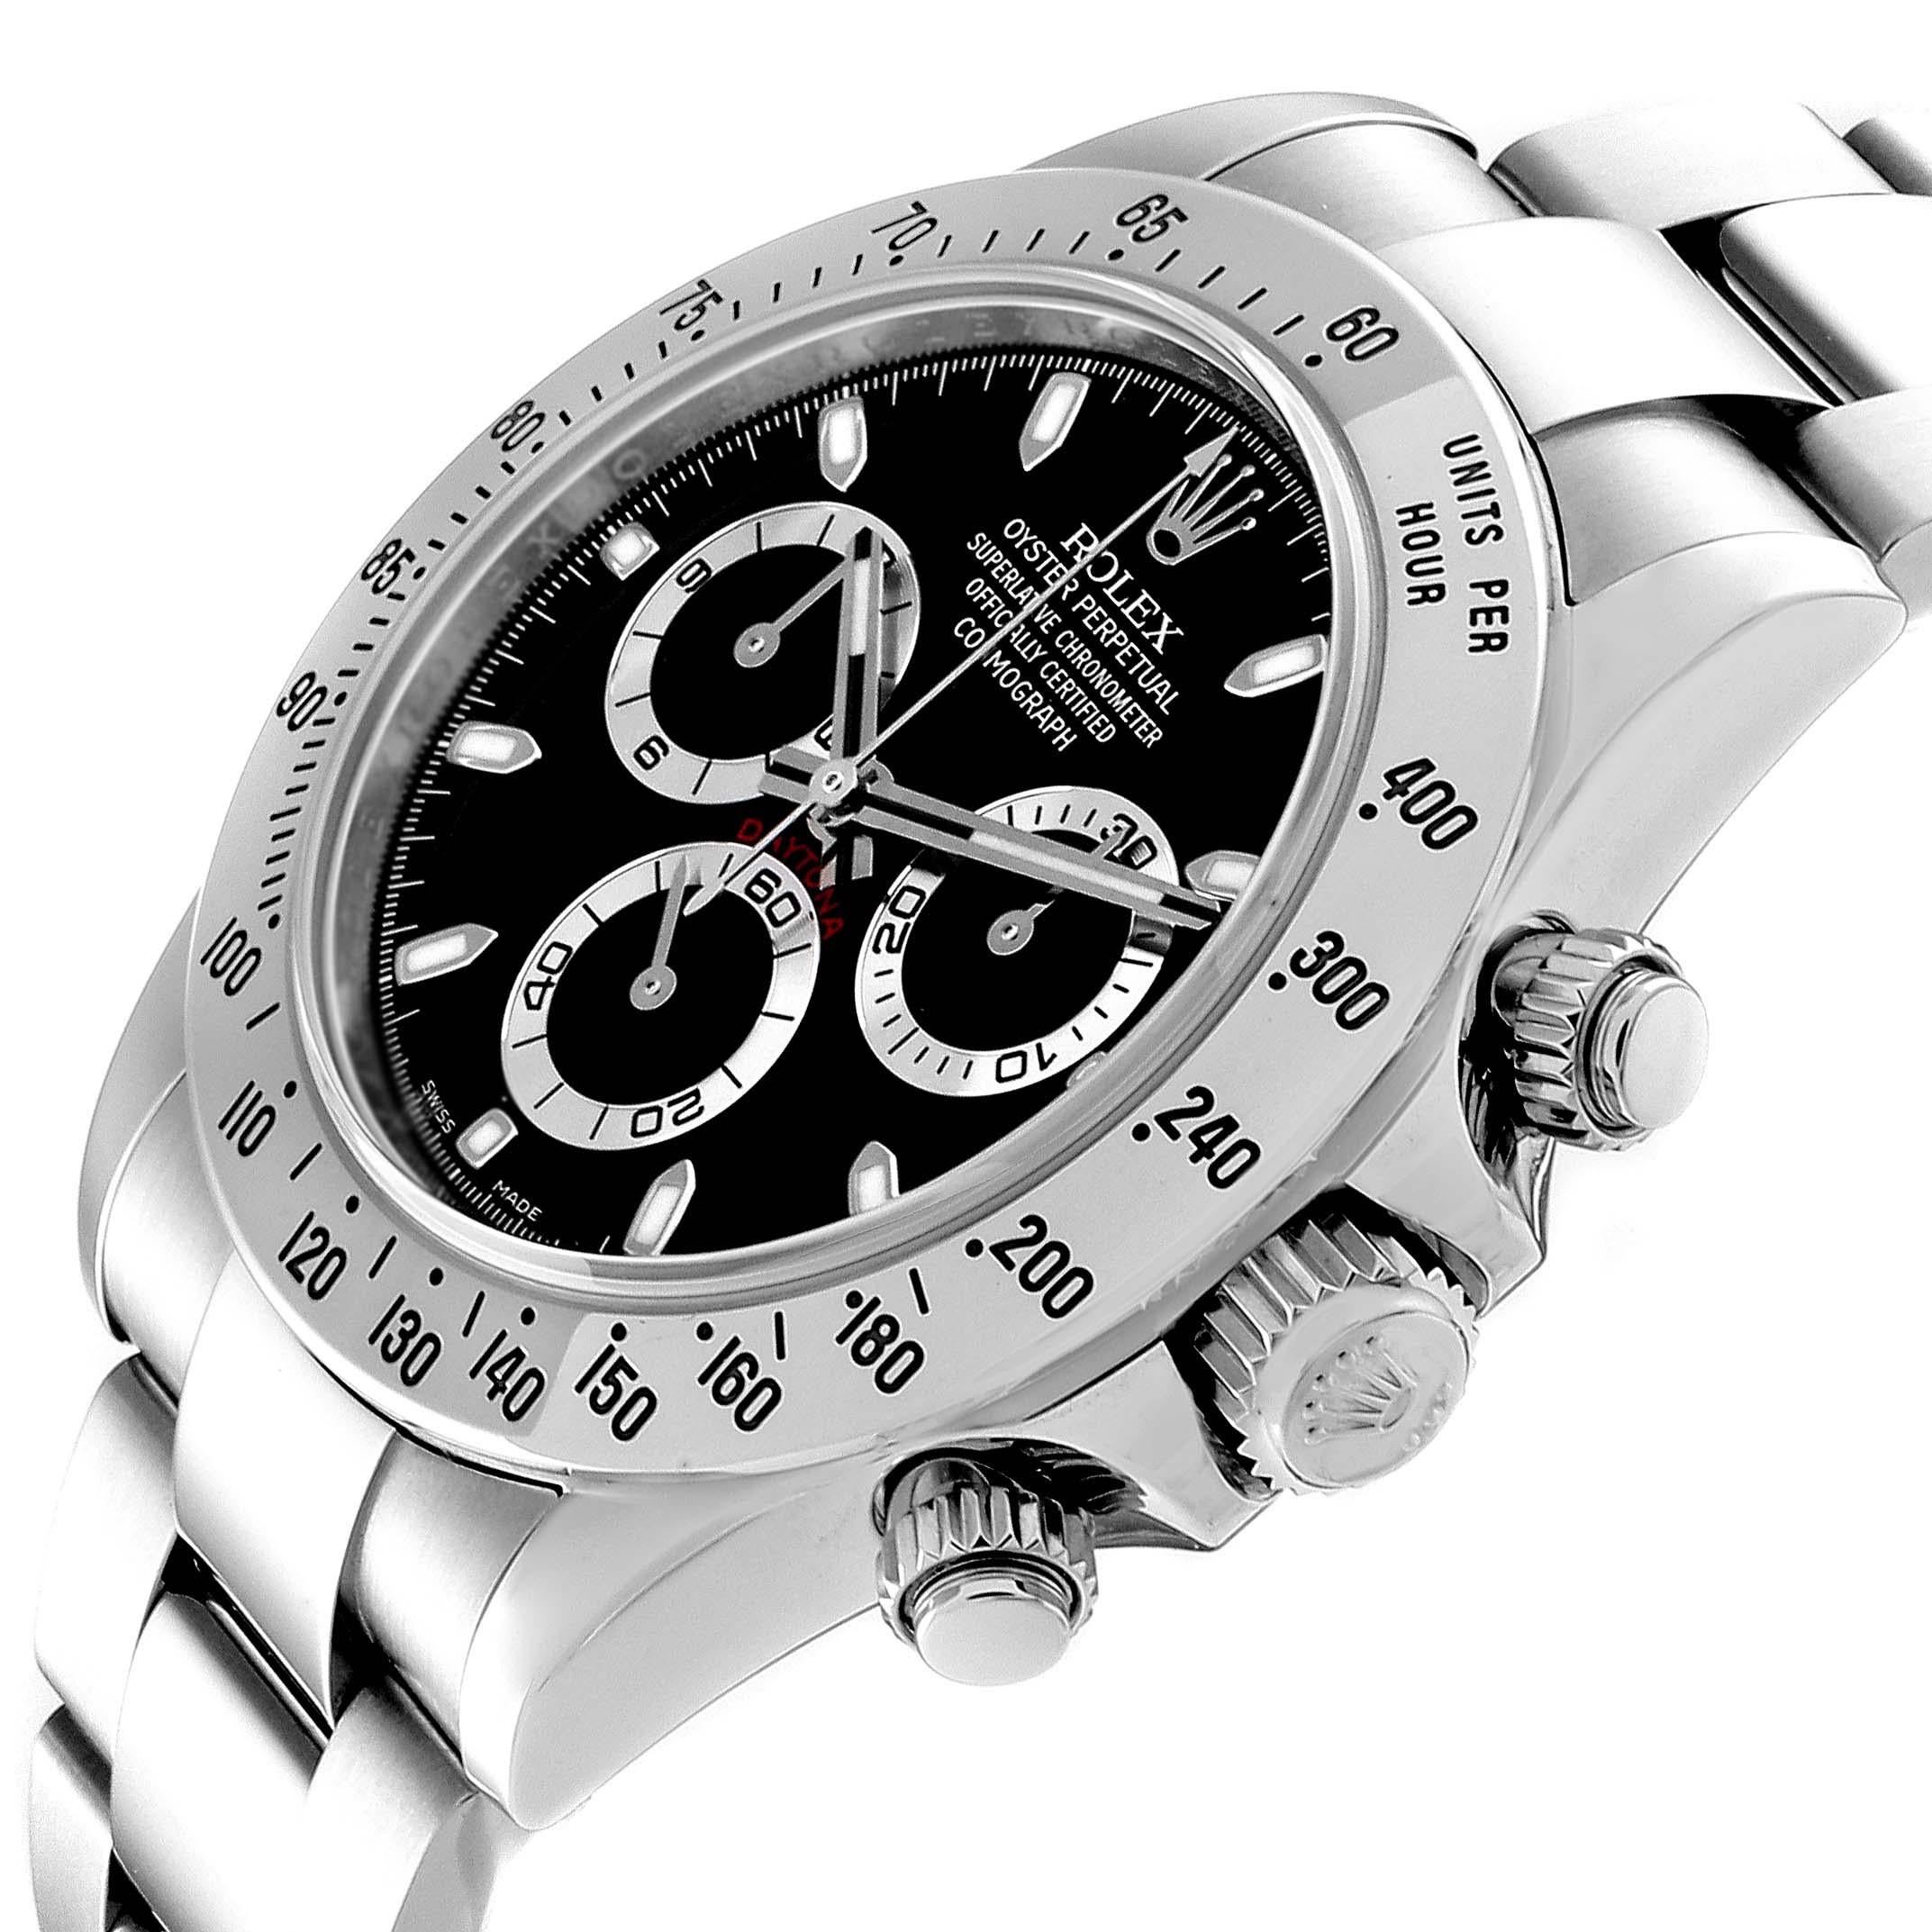 Rolex Daytona Black Dial Chronograph Stainless Steel Men's Watch 116520 2